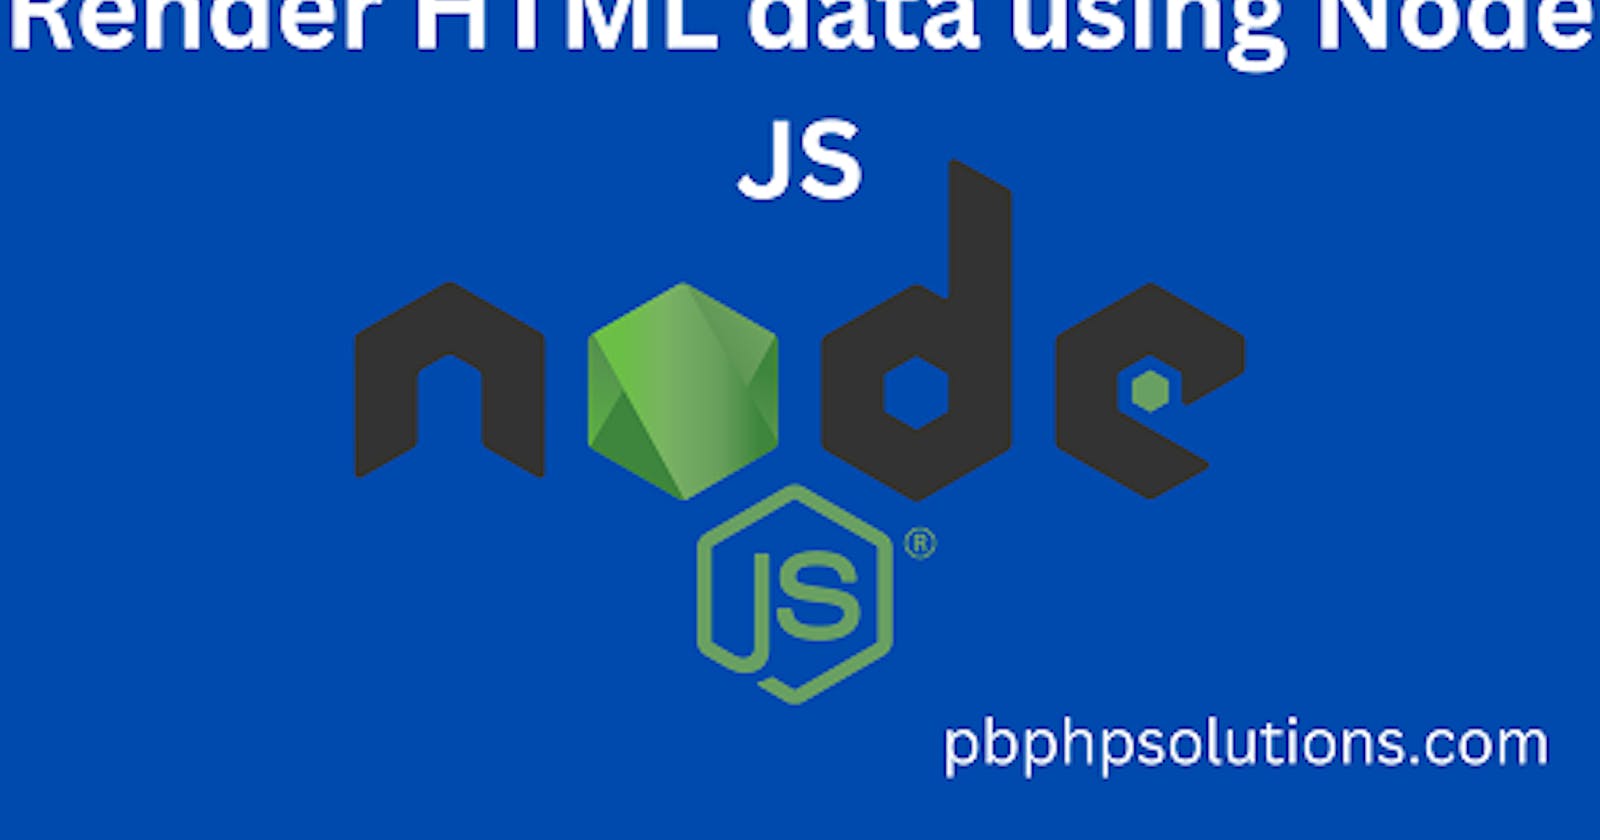 How to Render HTML Data using Node JS